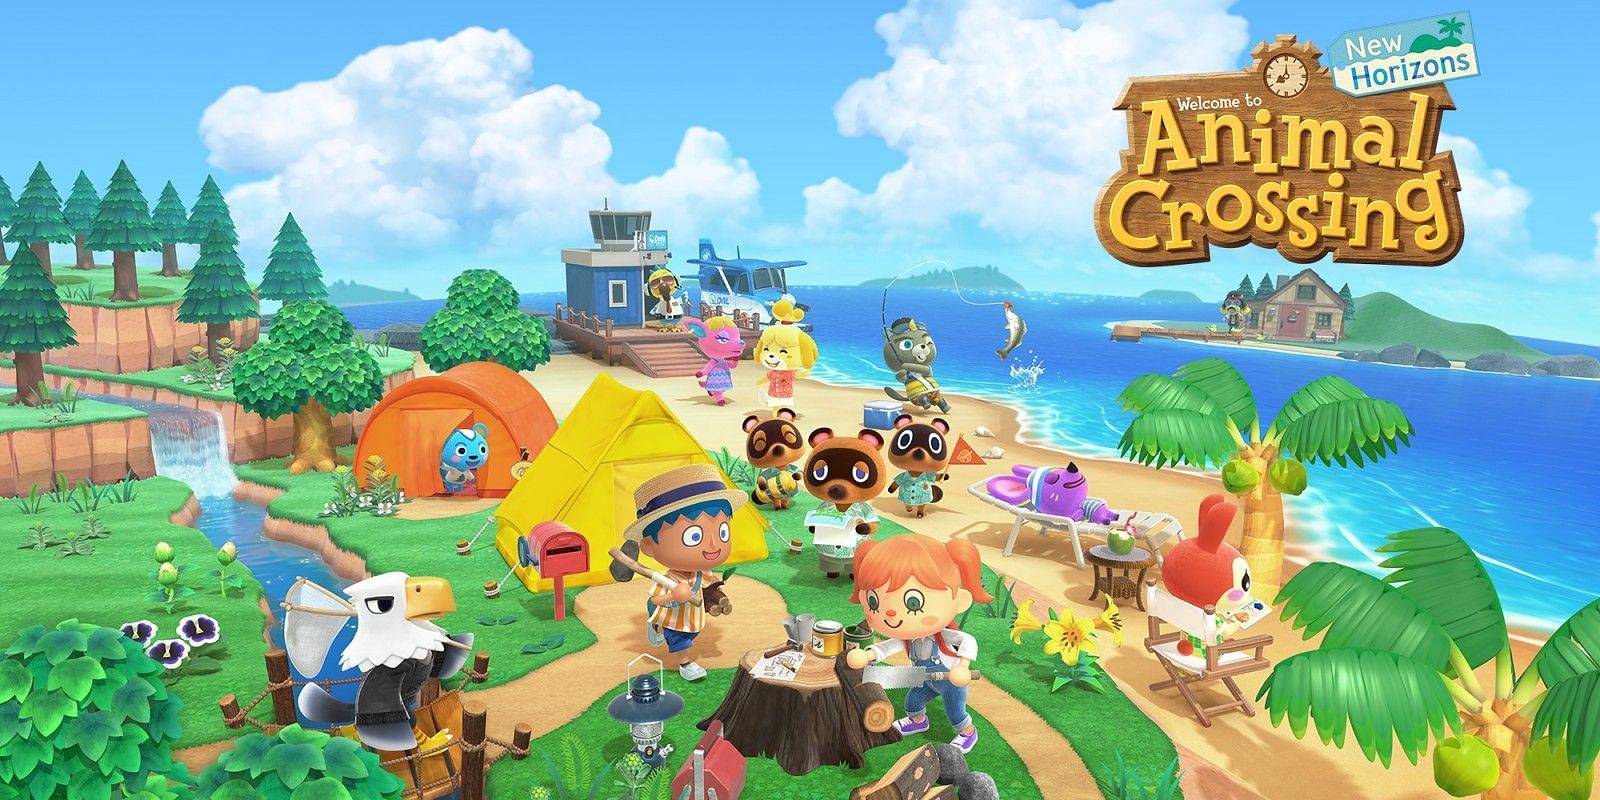 Relaxing Games - Animal Crossing (Image via Nintendo)